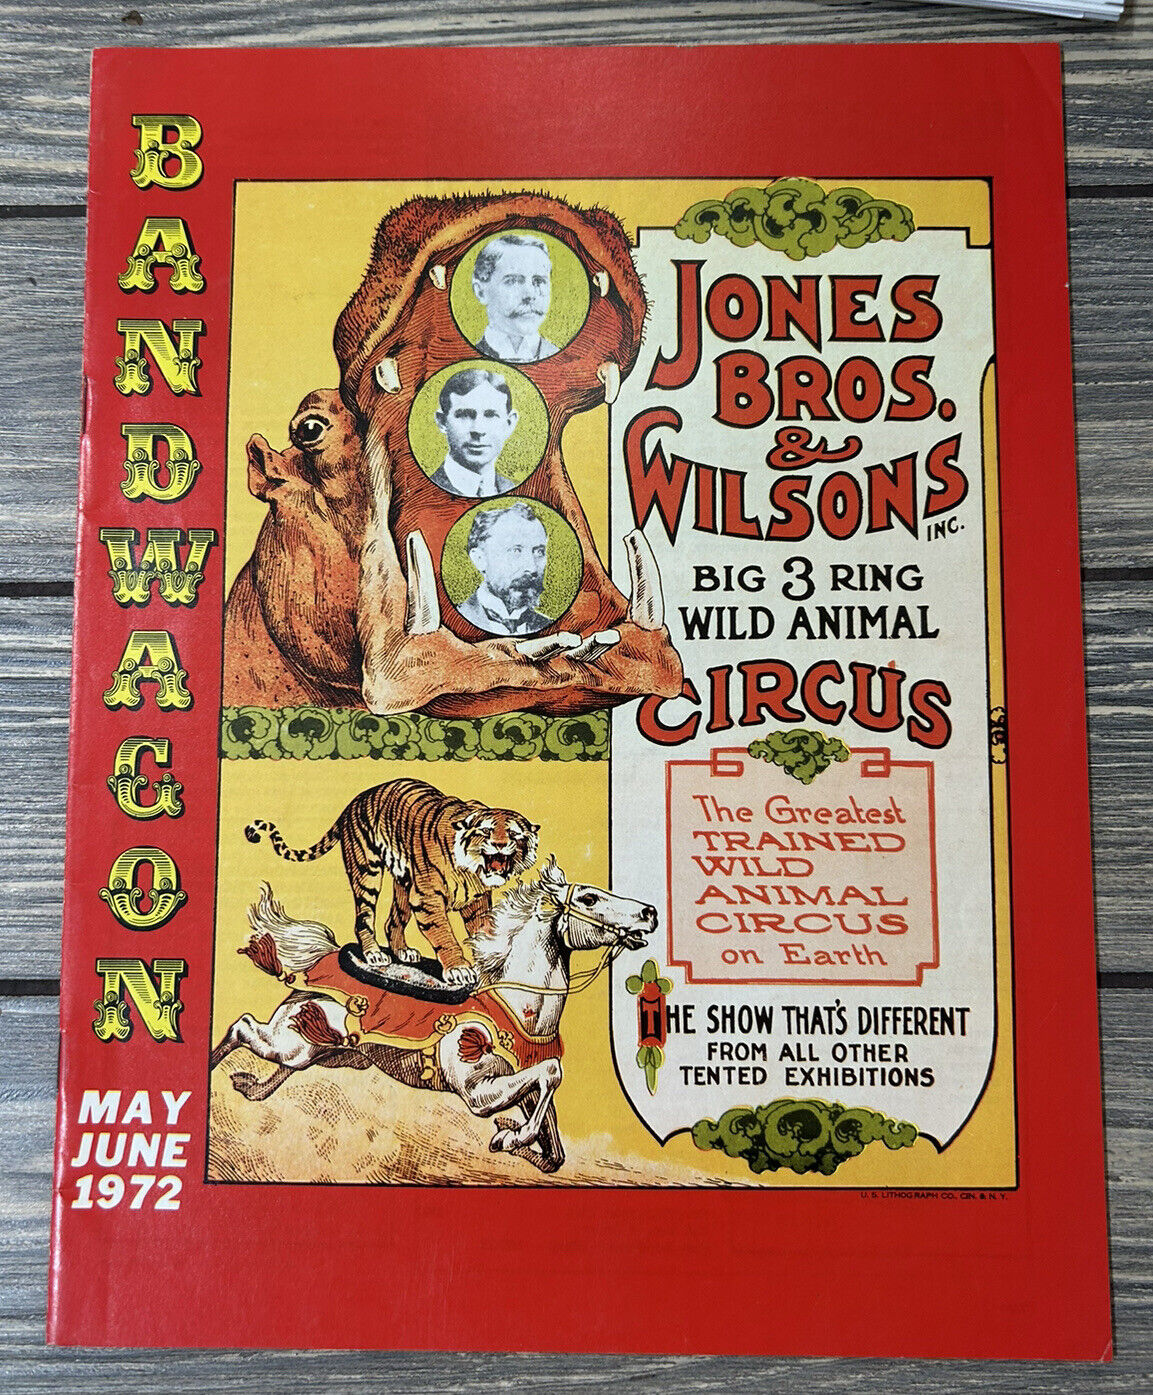 VTG 1972 May June Jones Bros and Wilsons Big 3 Ring Wild Animal Circus Program